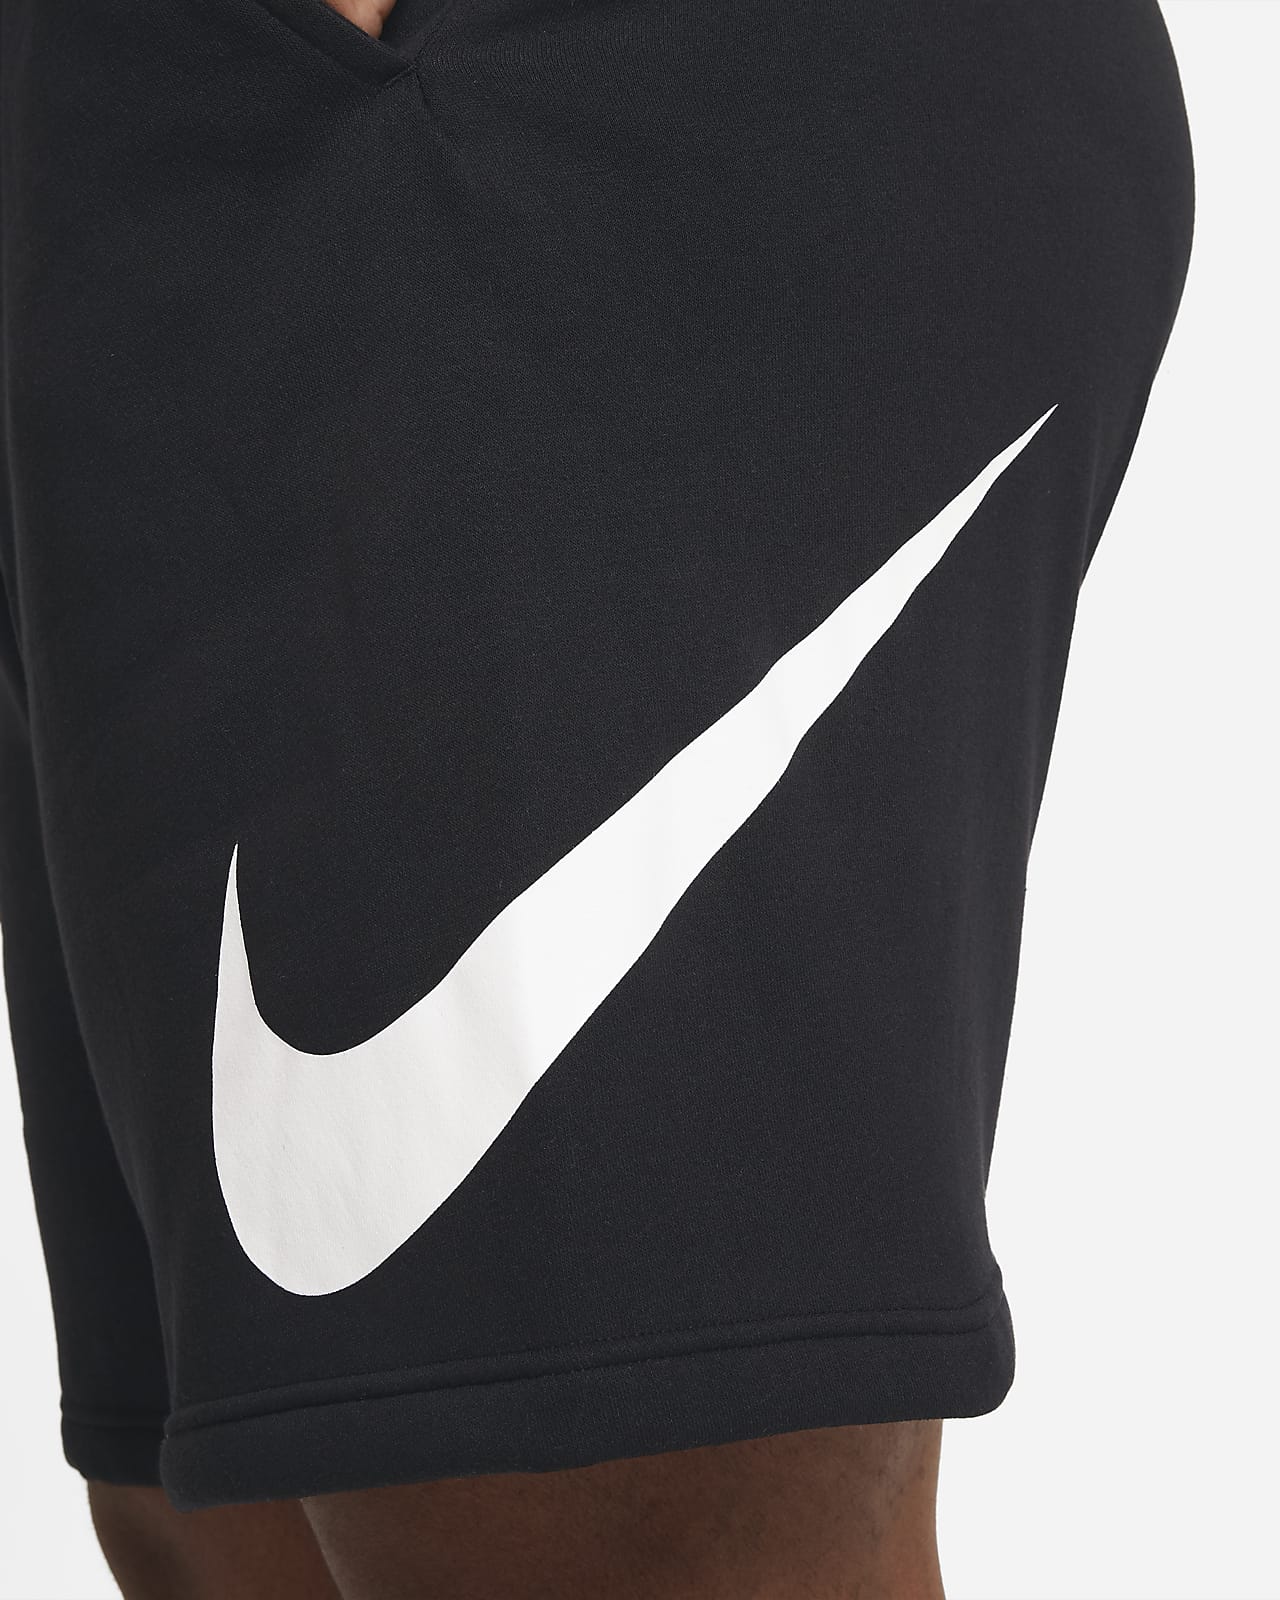 Graphic Club Nike Shorts. Men\'s Sportswear